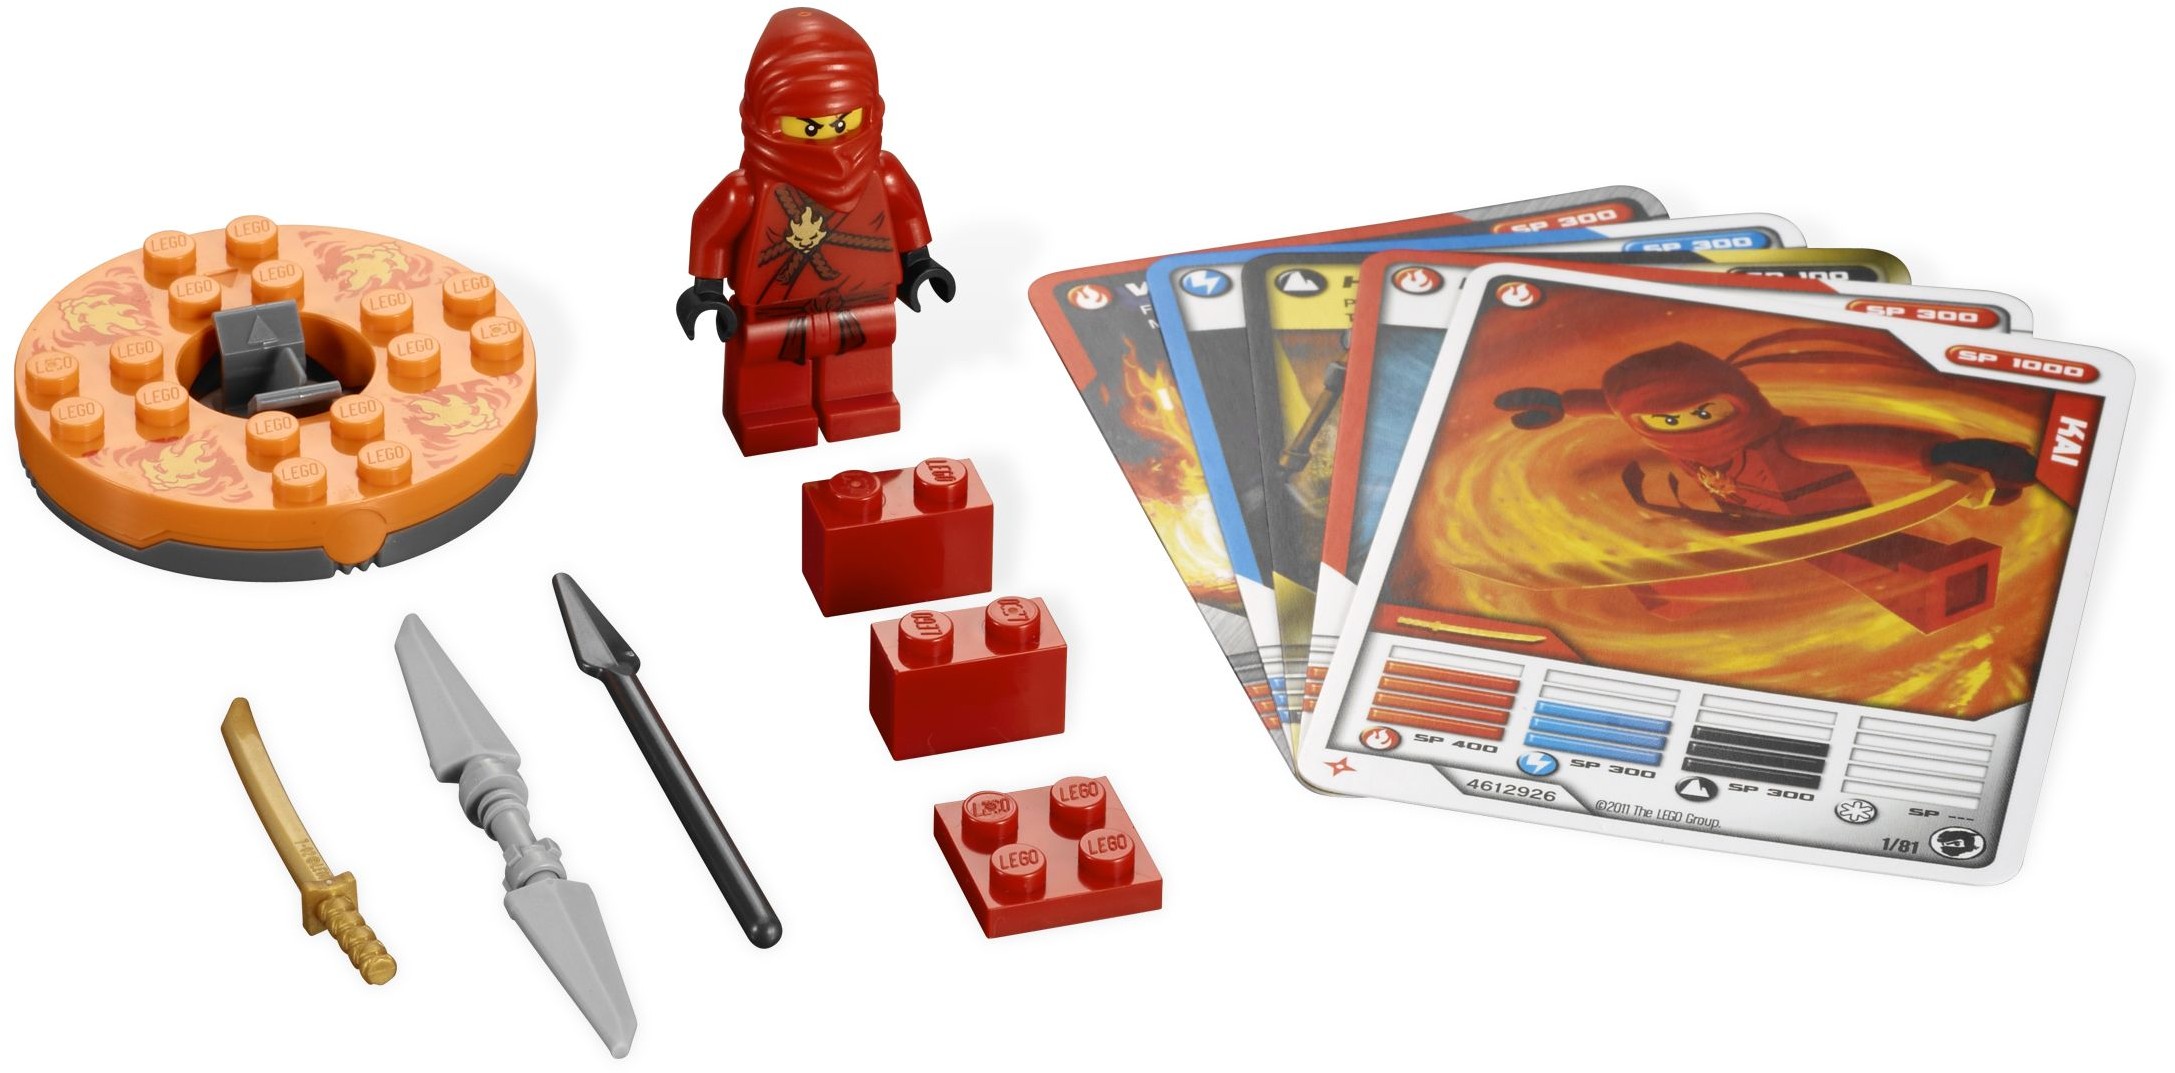 Ninjago | Brickset: LEGO set and